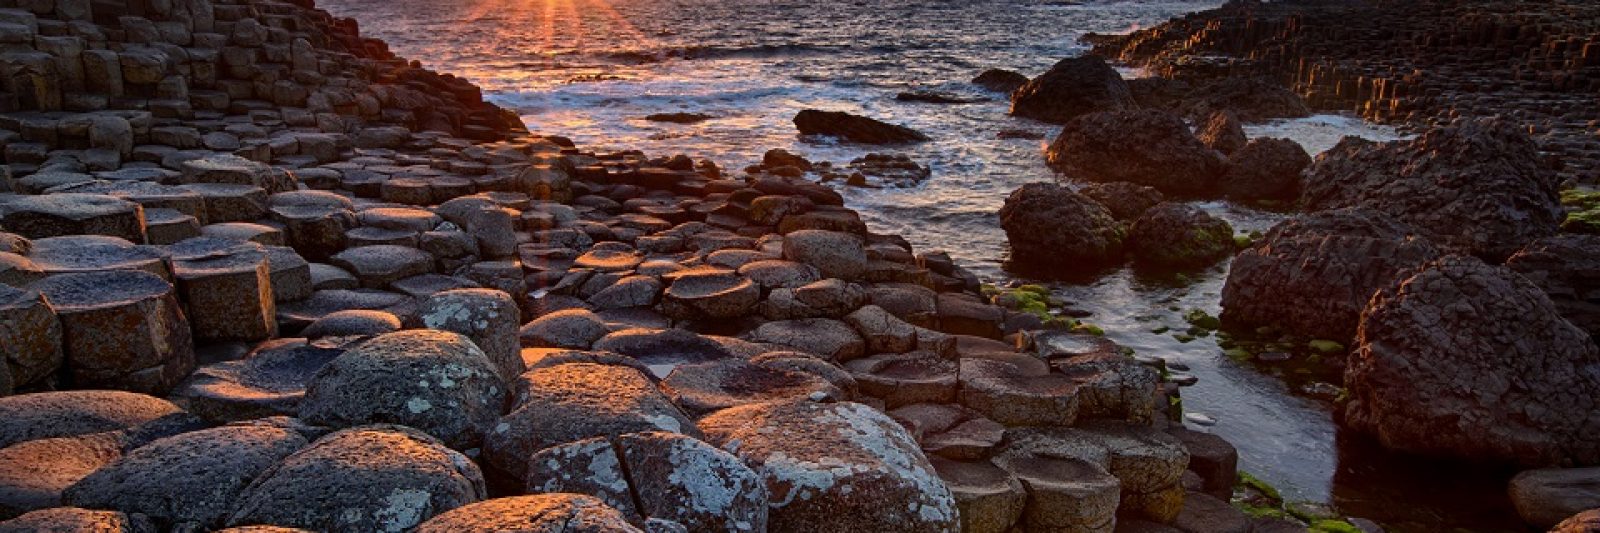 sunset over basalt columns Giant's Causeway, County Antrim, Northern Ireland